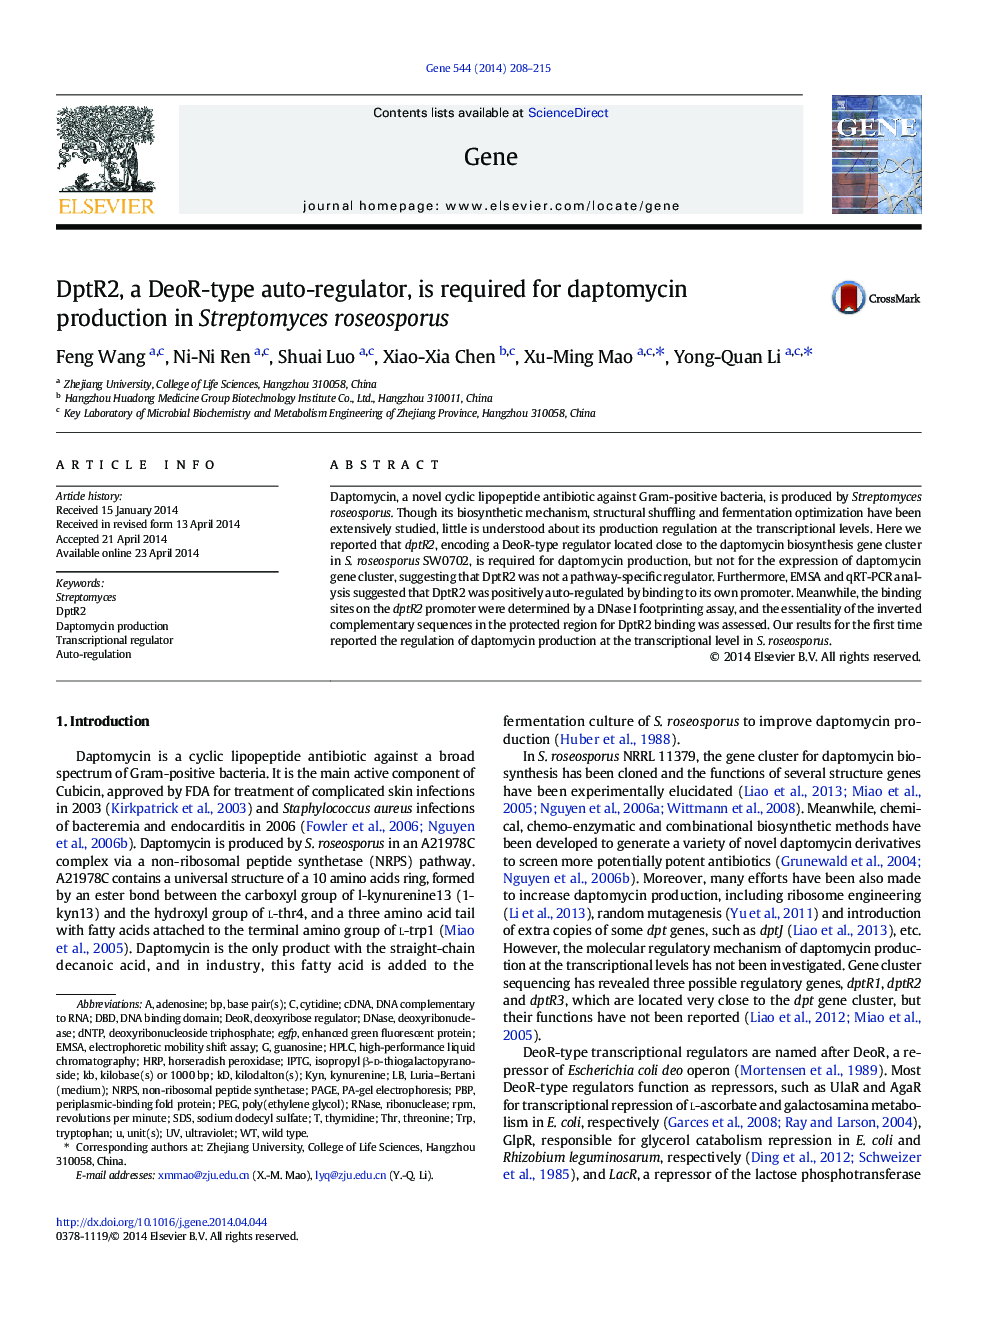 DptR2, a DeoR-type auto-regulator, is required for daptomycin production in Streptomyces roseosporus